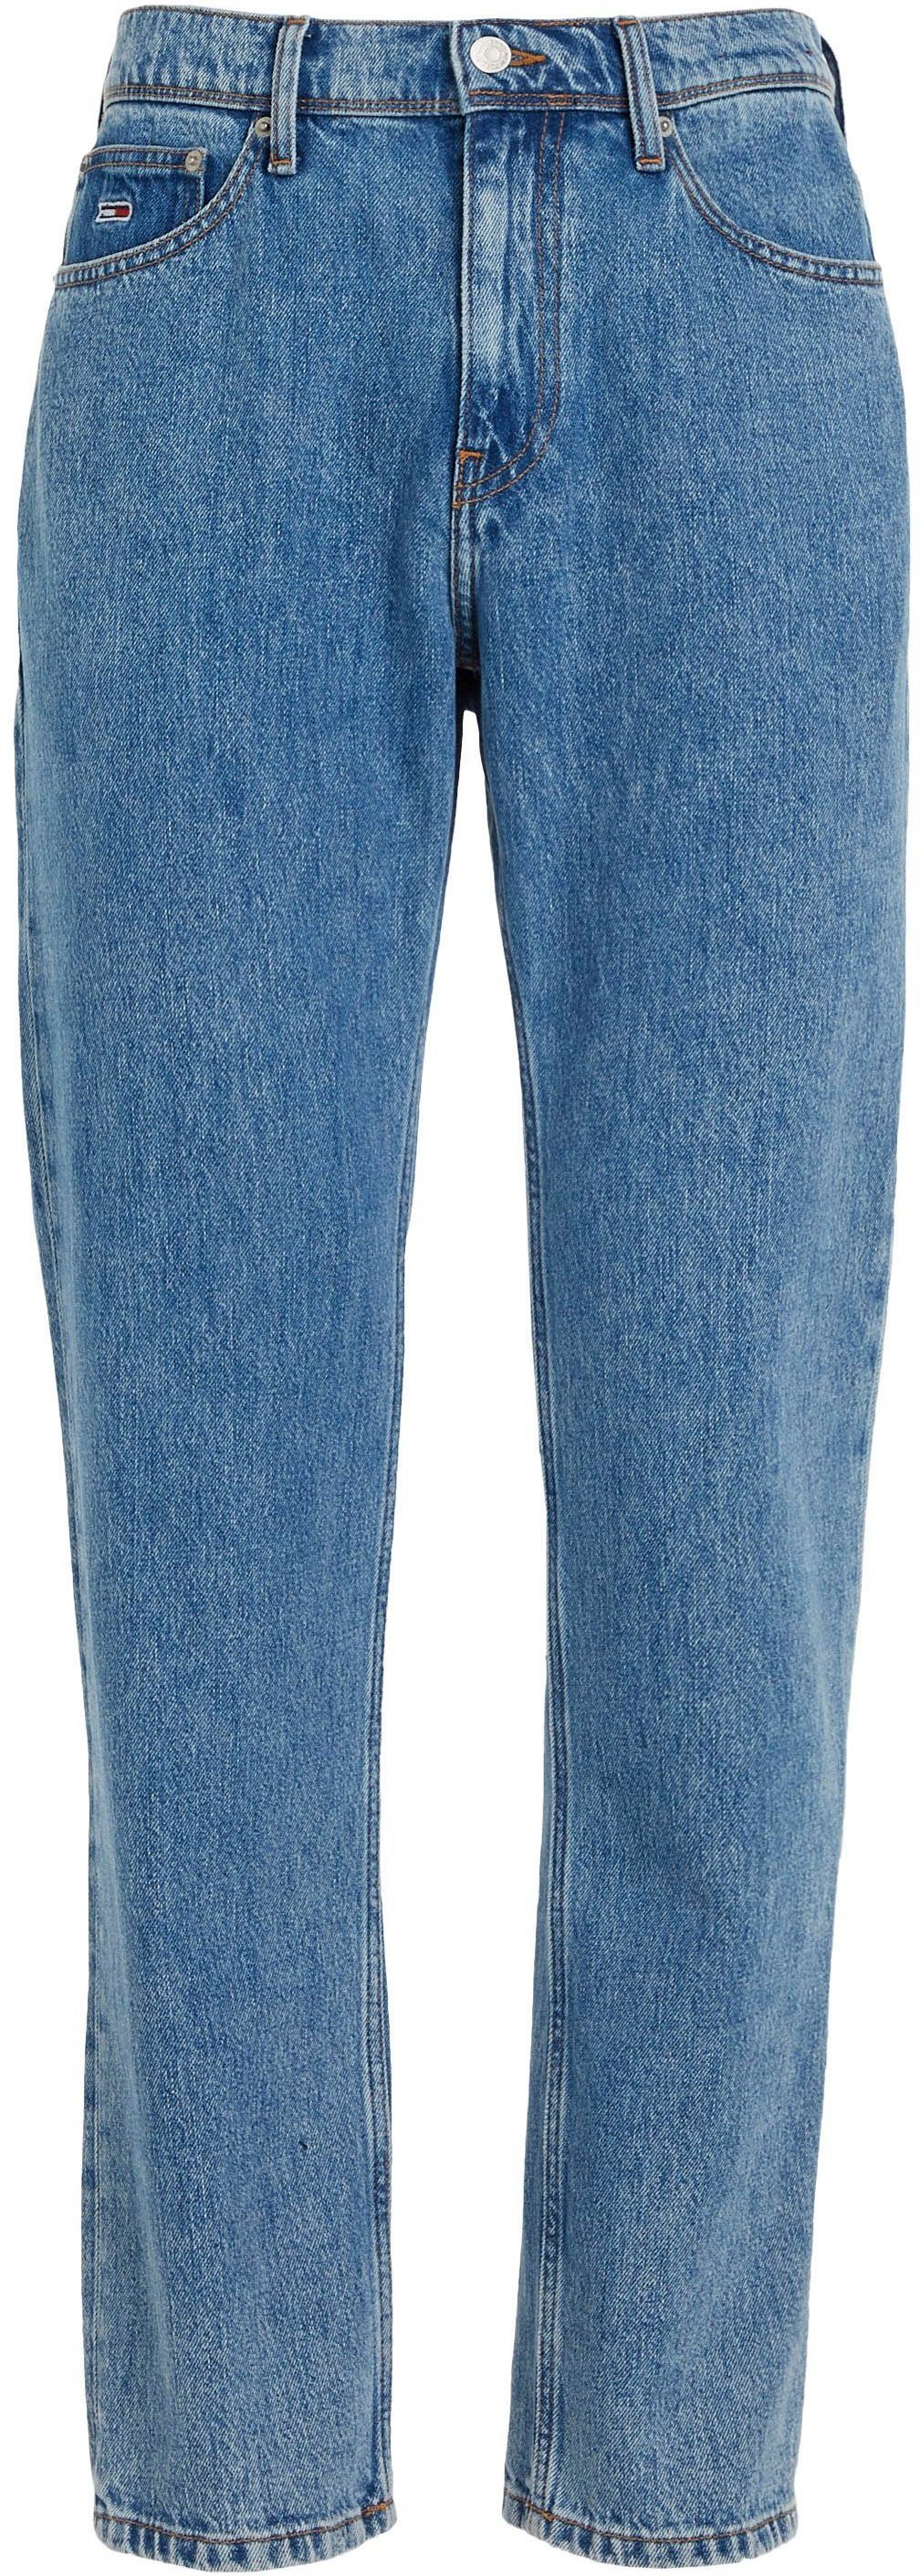 ETHAN Jeans STRGHT RLXD Tommy Denim CG4036 5-Pocket-Jeans Medium